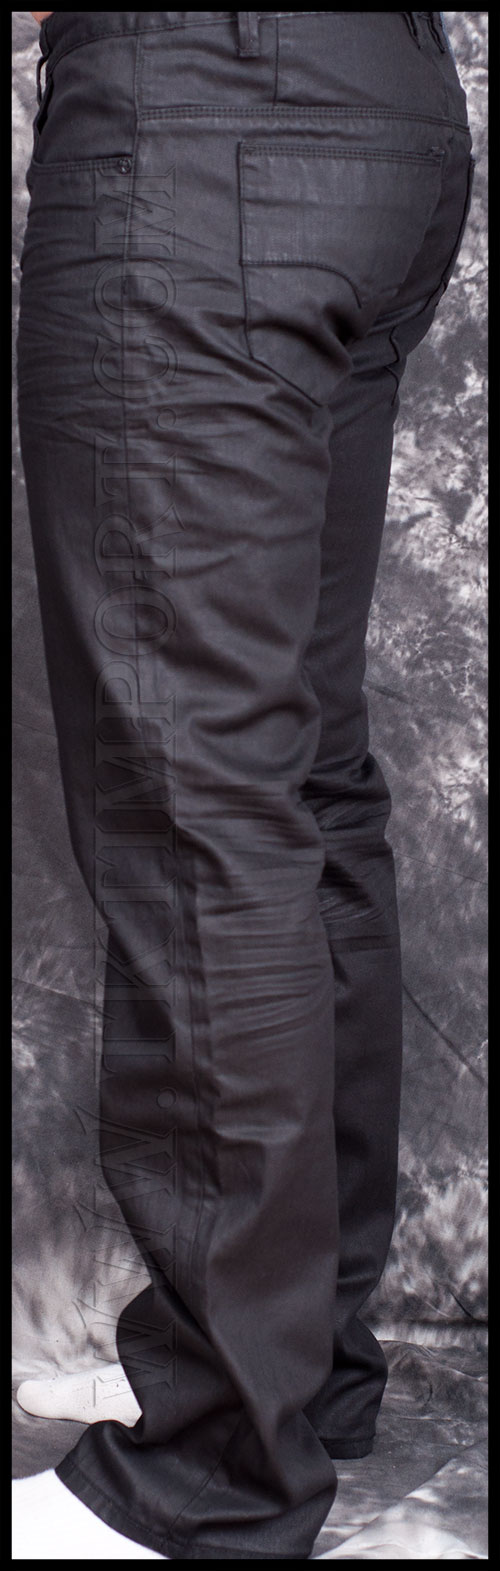   Justing Jeans - W-6001-J4-Black